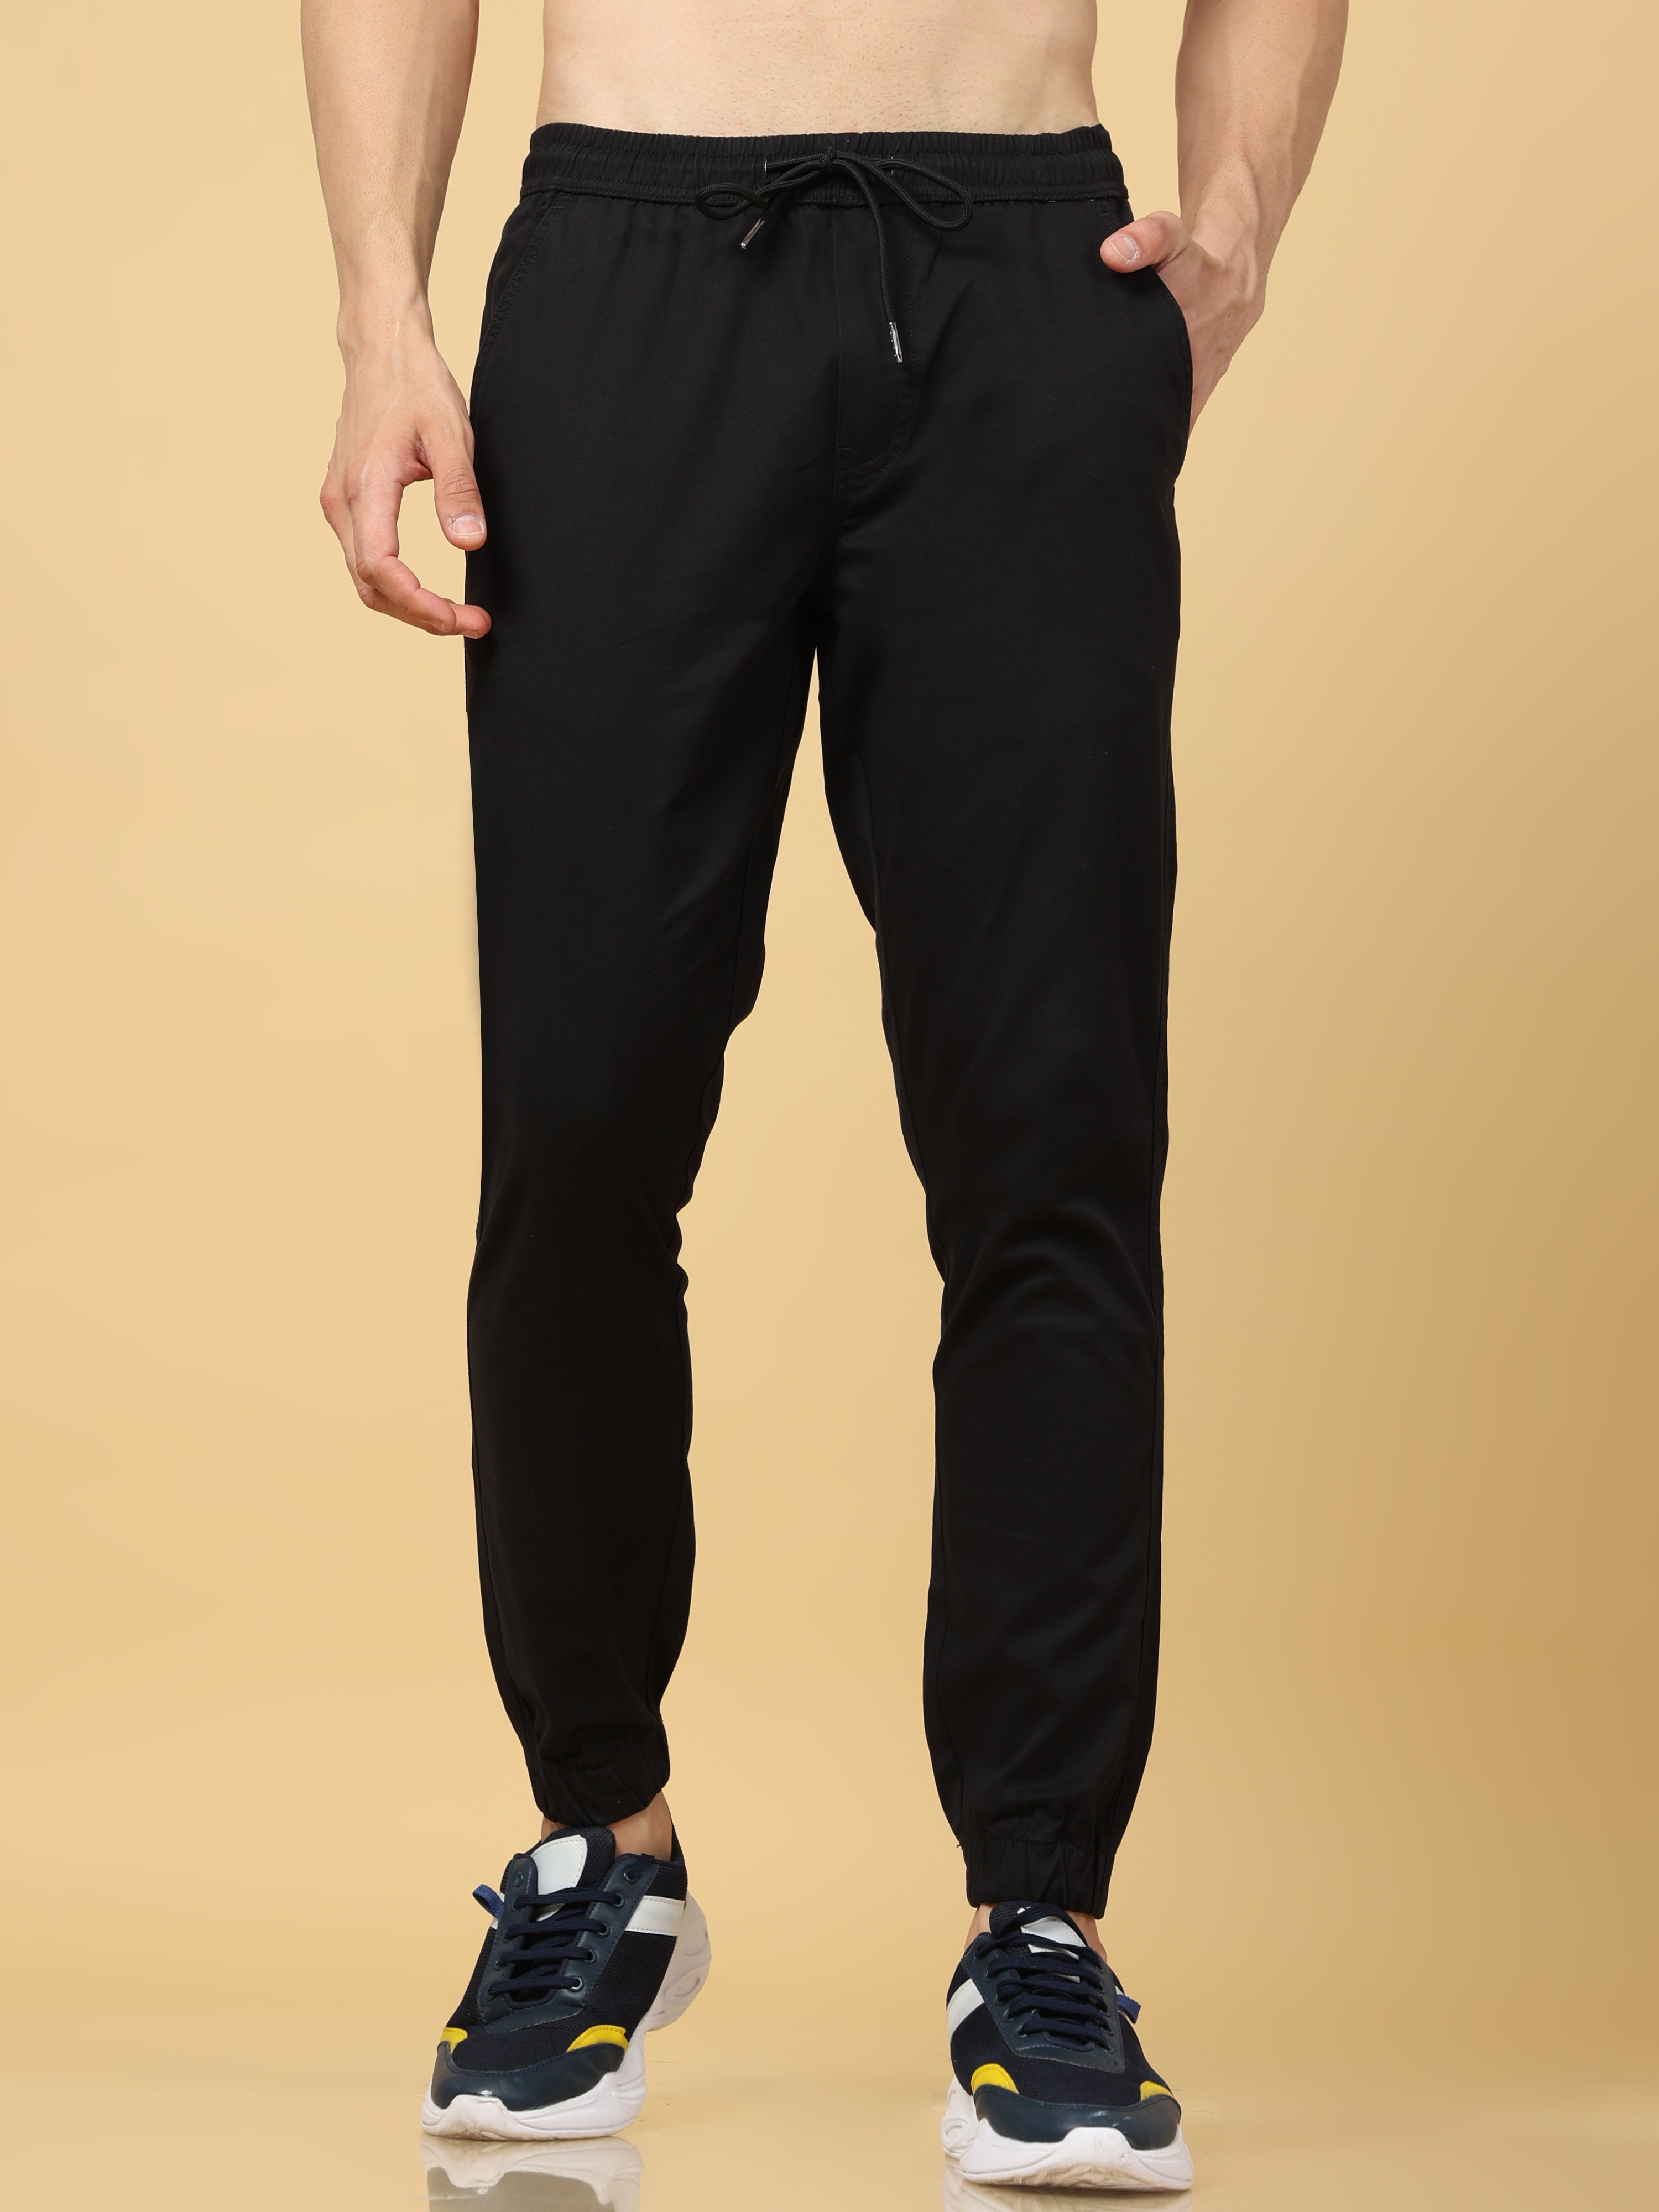 Buy Stylish Dark Brown Jogger Pants for Men Online in India